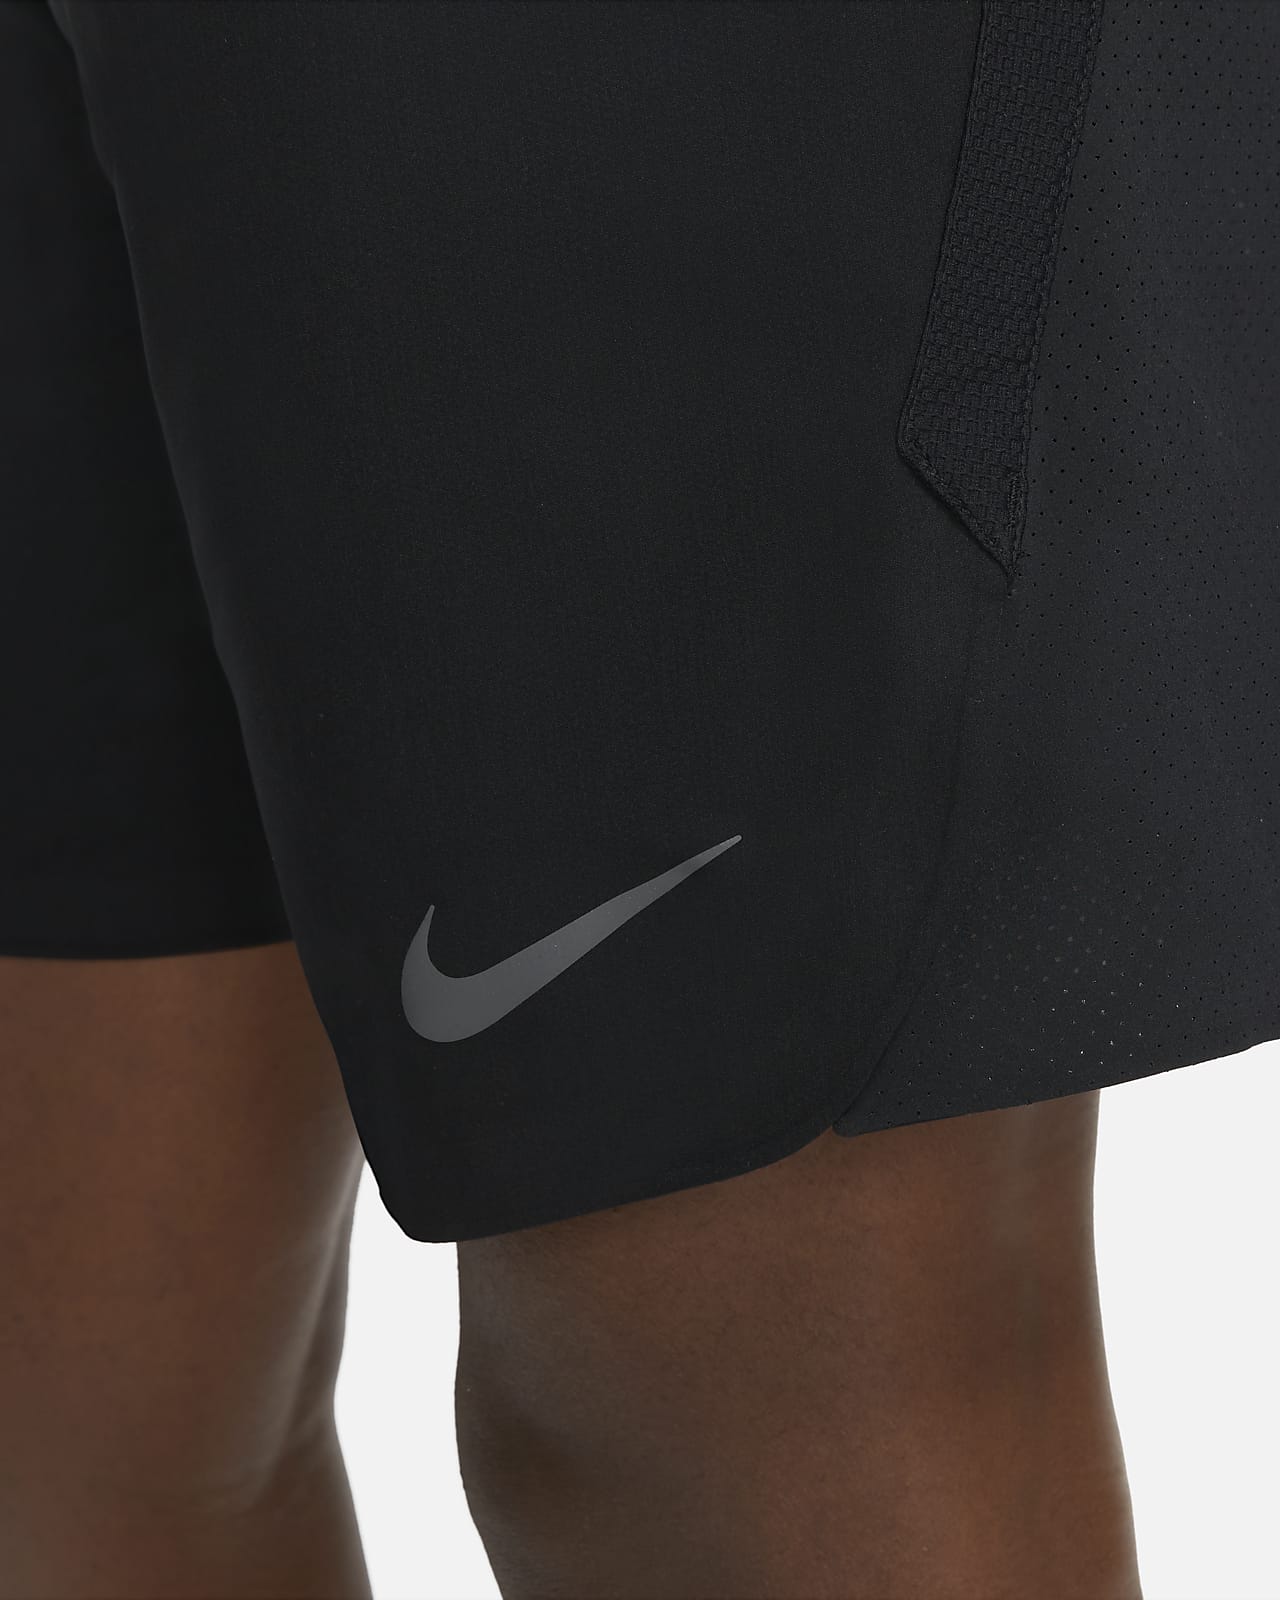 Consentimiento Untado Pack para poner Nike Dri-FIT Flex Rep Pro Collection Men's 8" Unlined Training Shorts. Nike .com